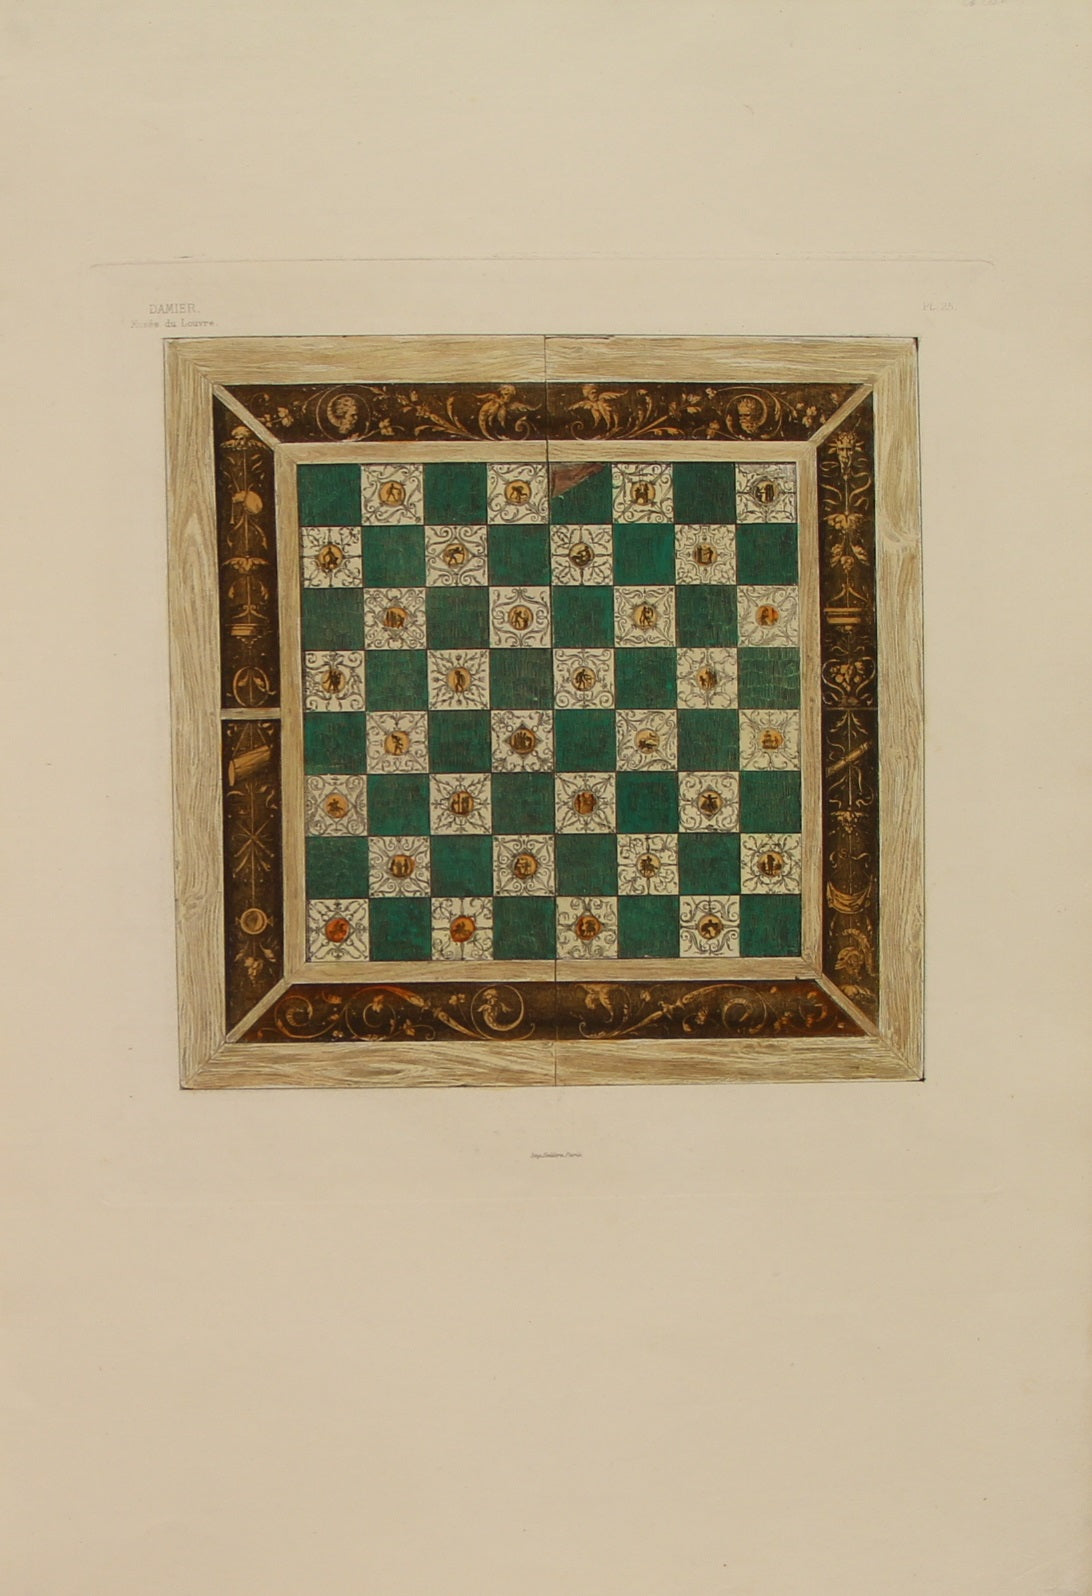 Decorator, Checkerboard, (Damier), Musee du Louvre, Paris c1850